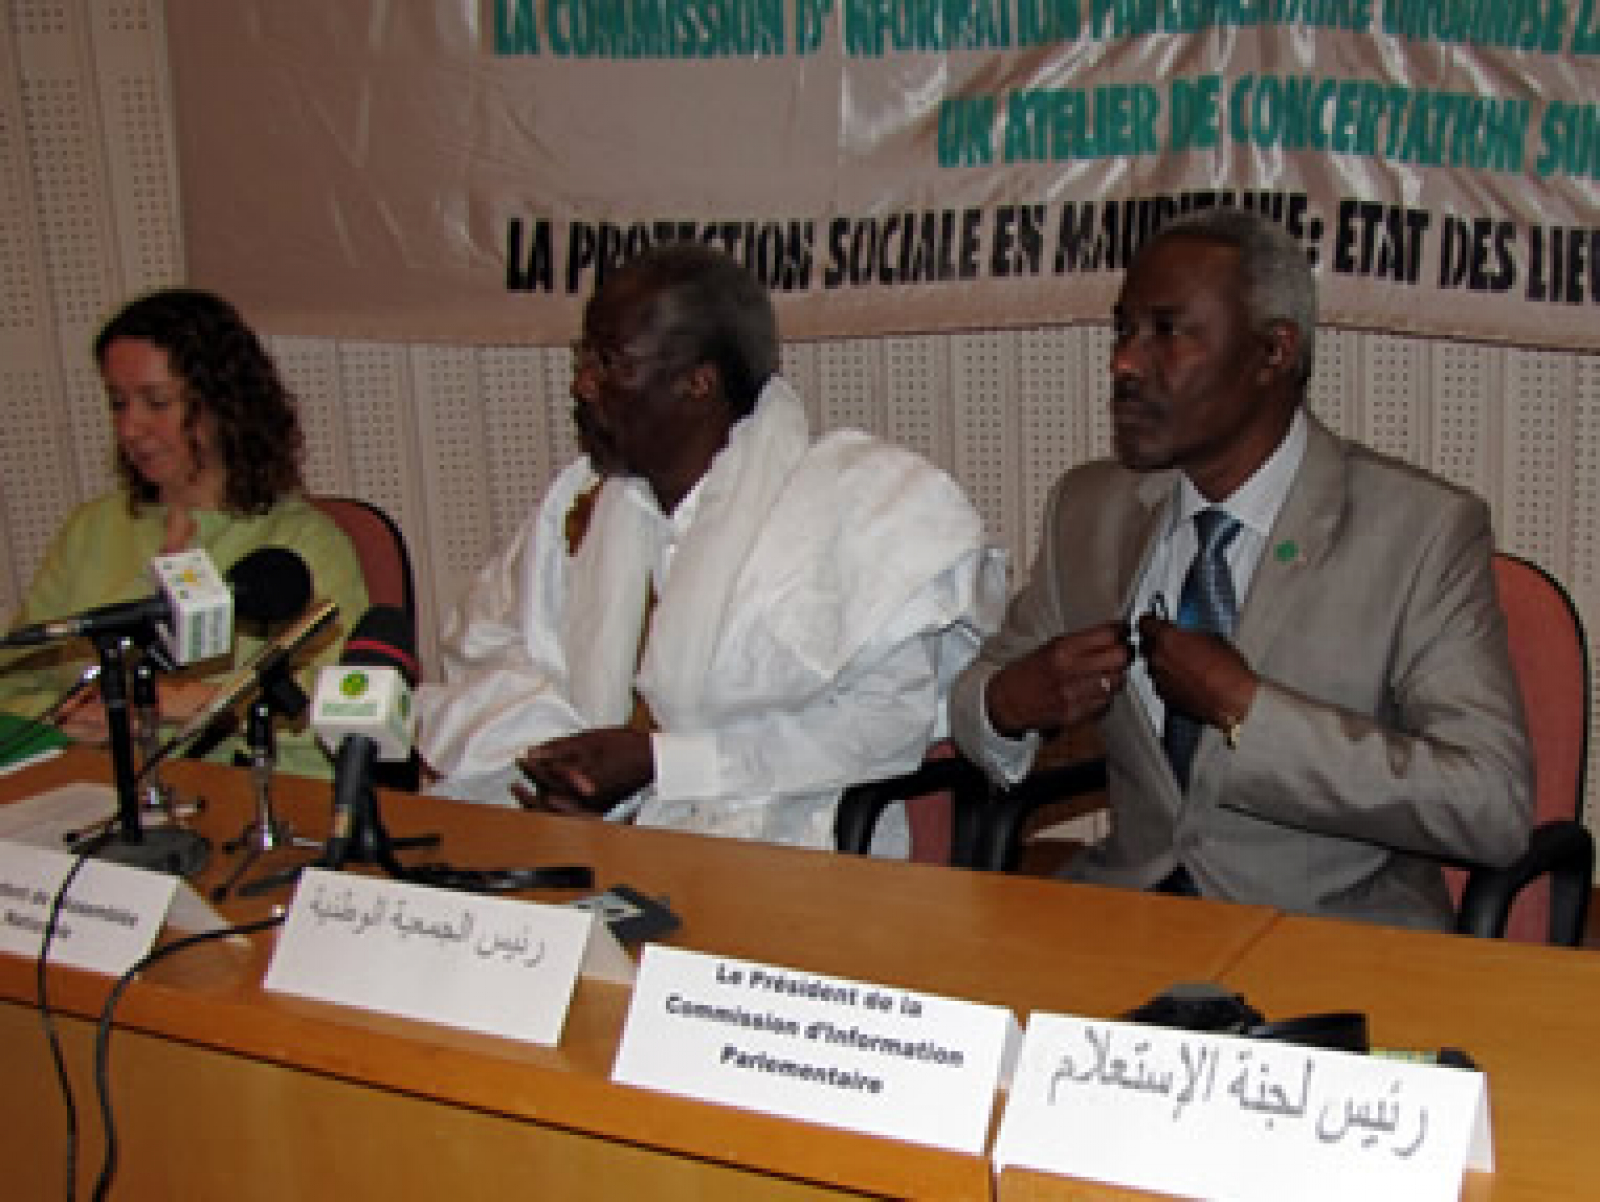 Mauritanian Parliament Seeks Citizen Input for Social Security Reform